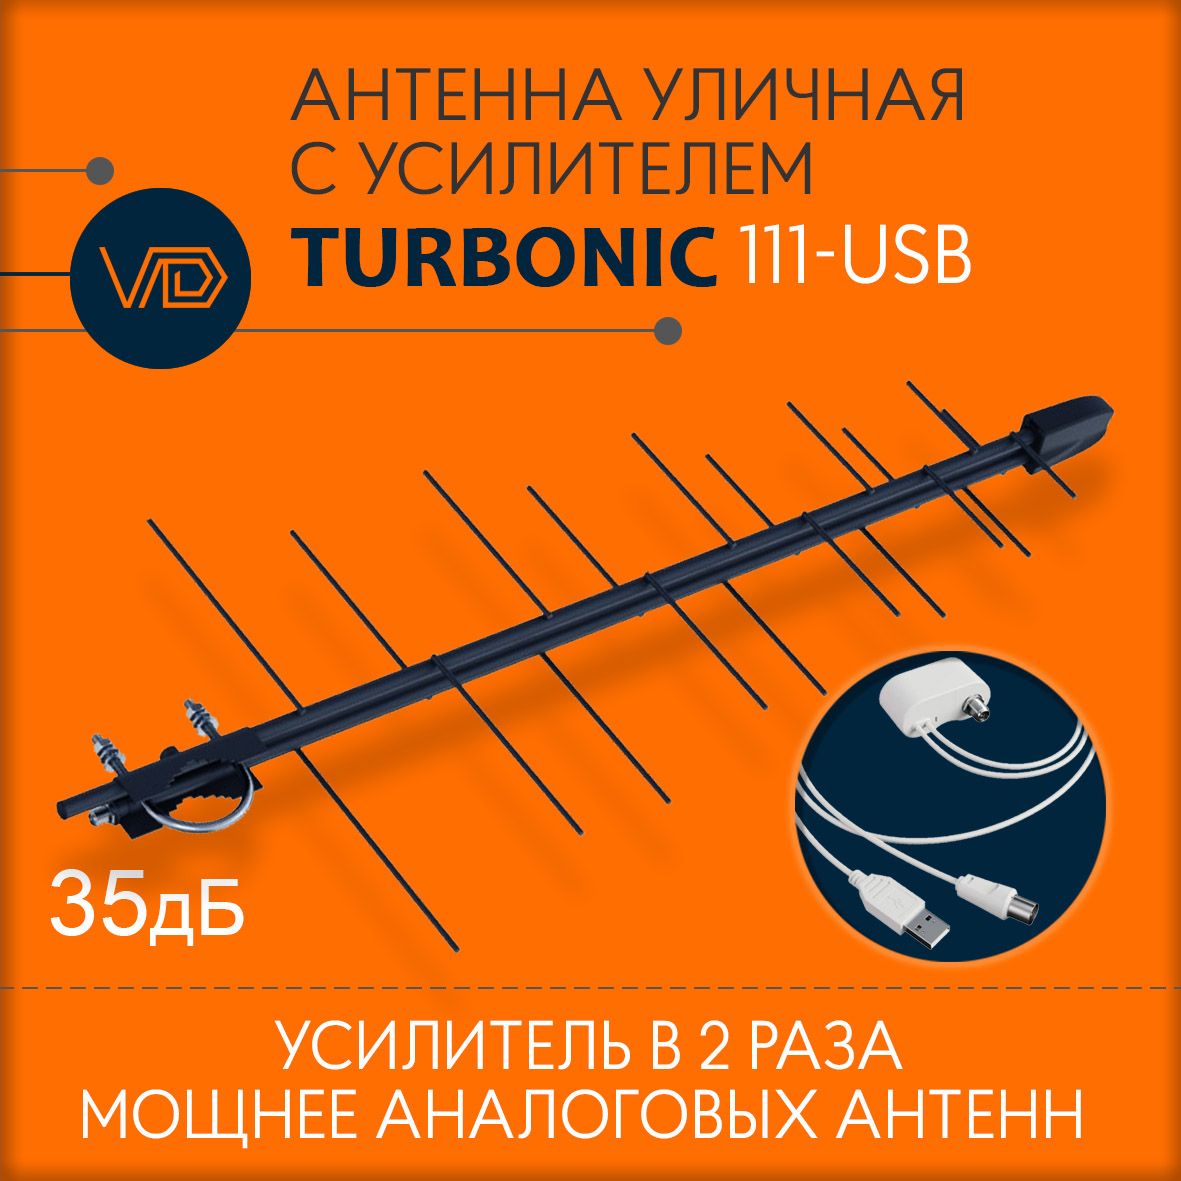 АнтеннауличнаяcусилителемVDturbonic-111-USB,активная,дляцифровоготв